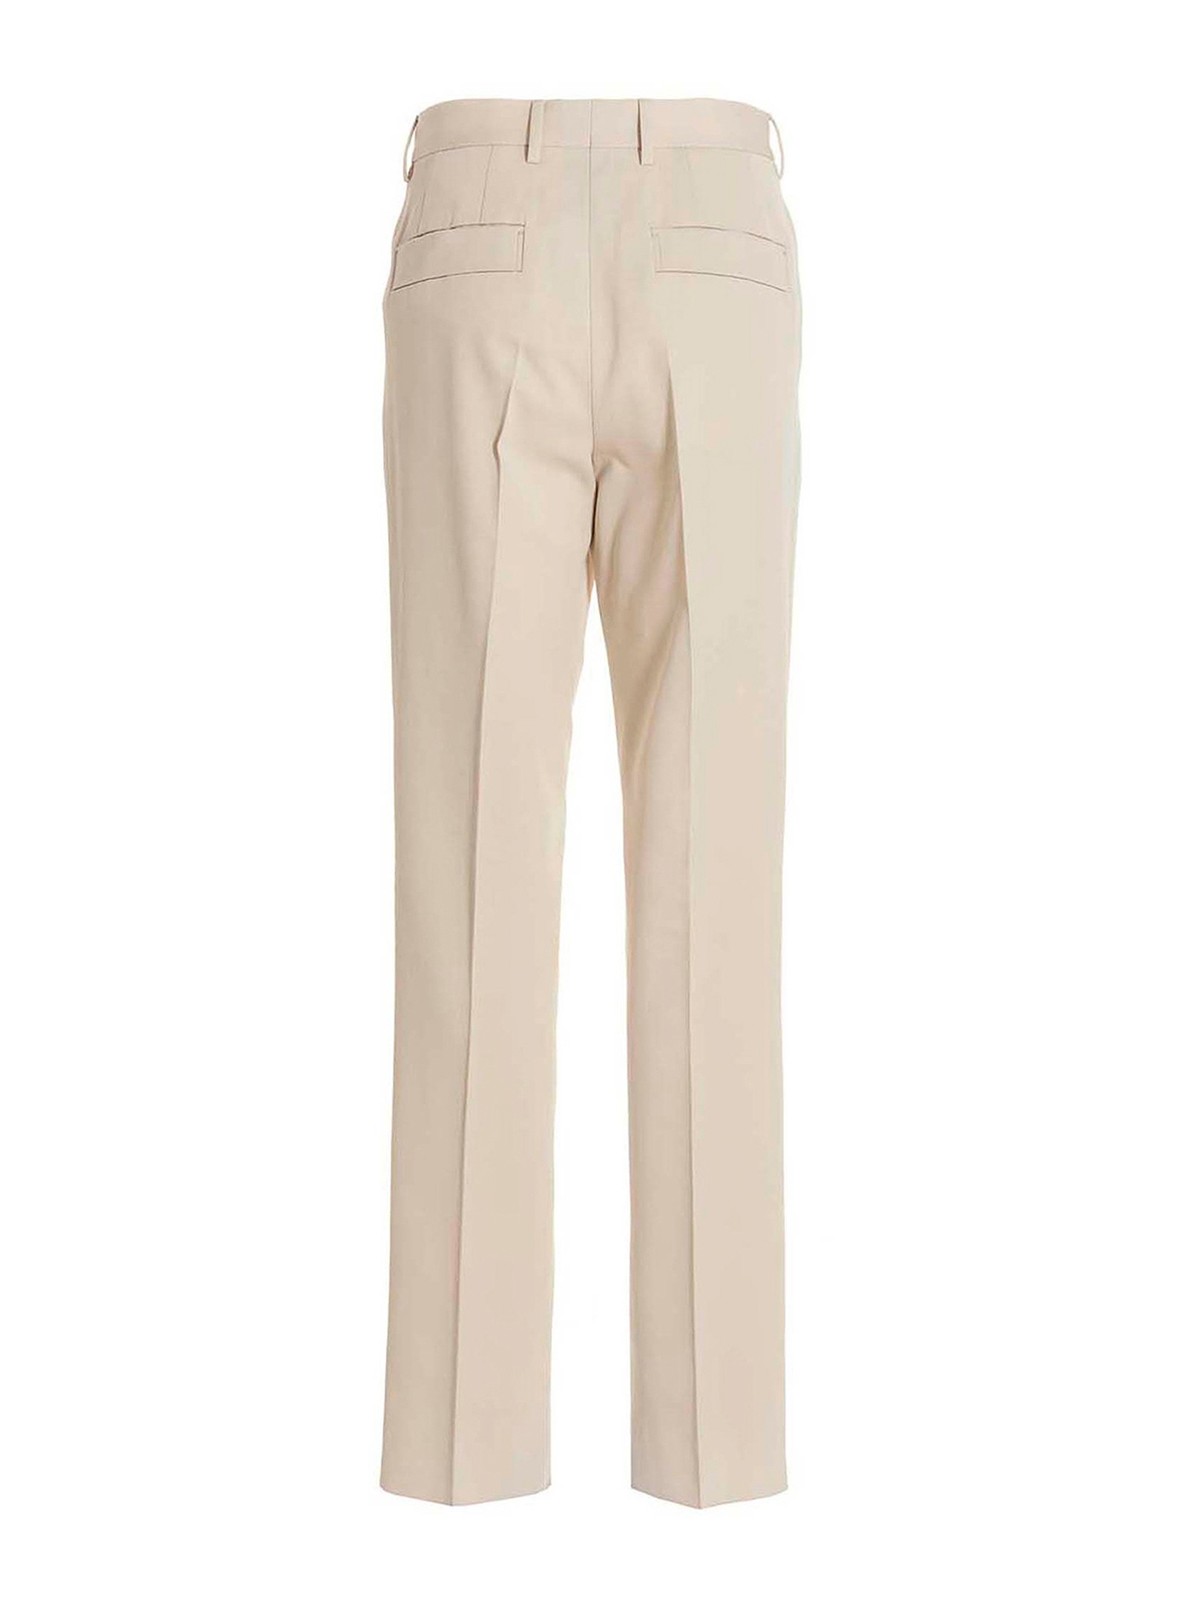 Buy Men Grey Textured Super Slim Fit Formal Trousers Online - 744803 |  Peter England